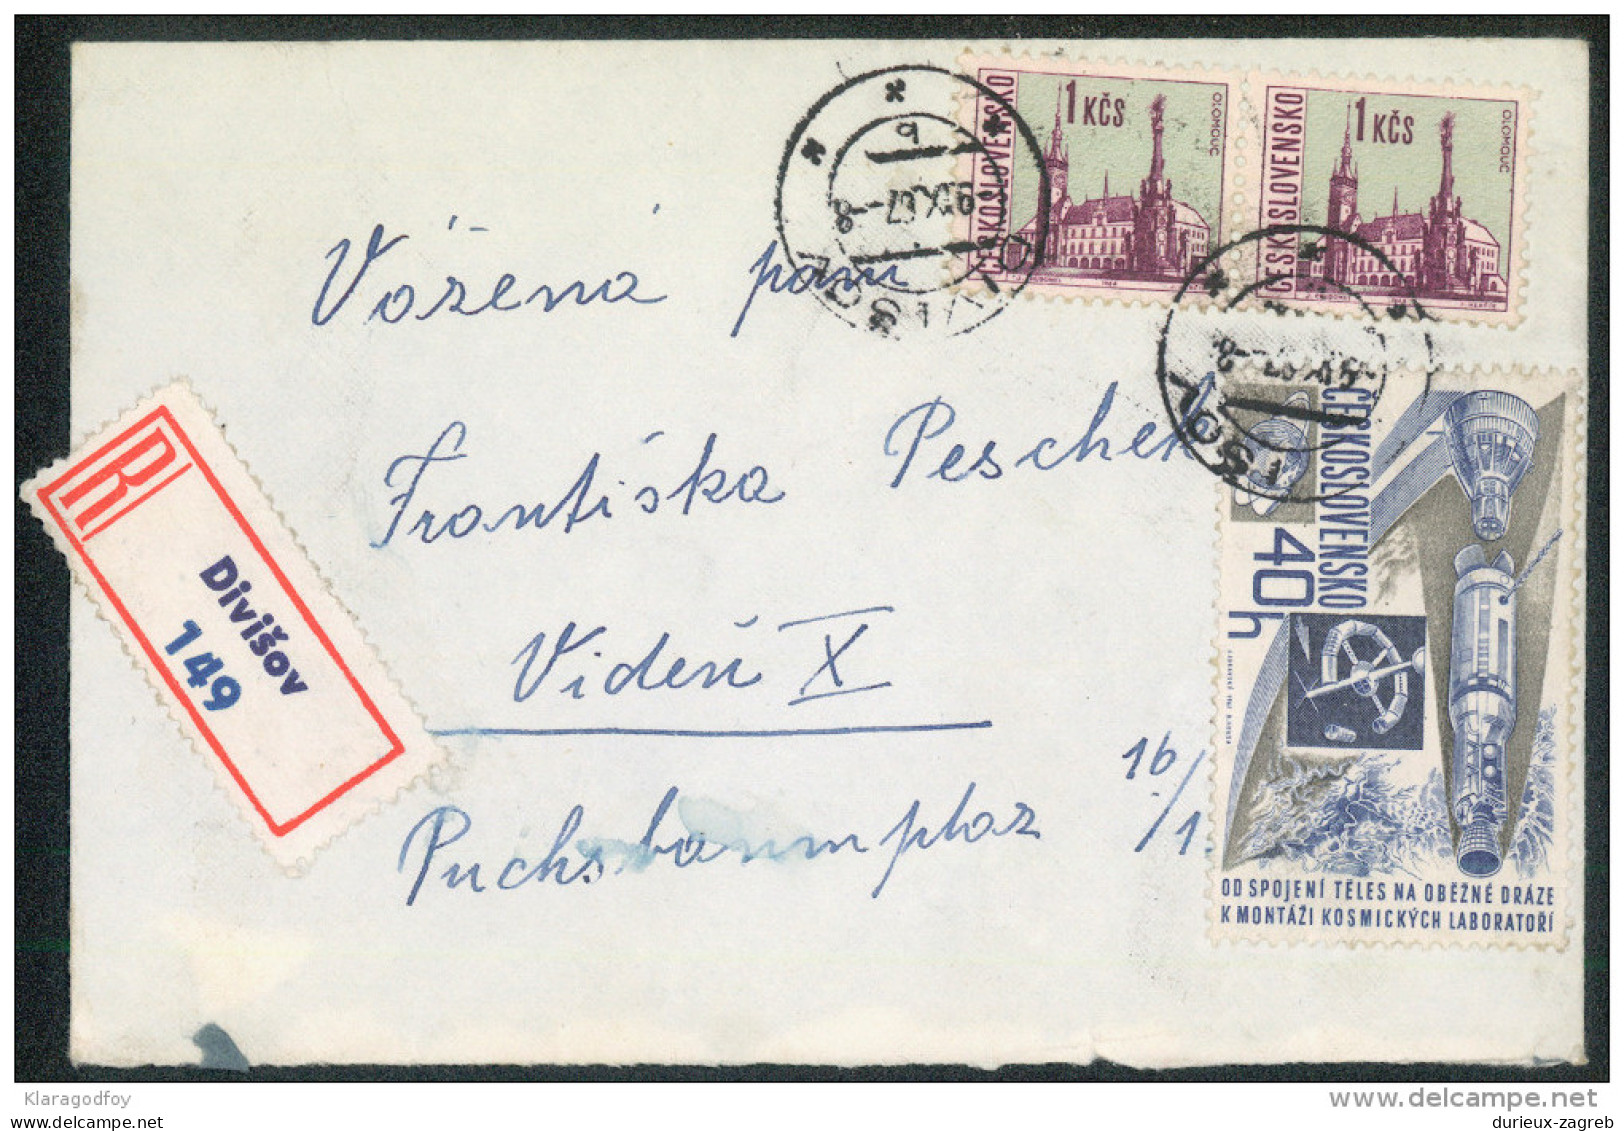 Czechoslovakia Letter Cover Registered Travelled 1967 Bb161028 - Briefe U. Dokumente